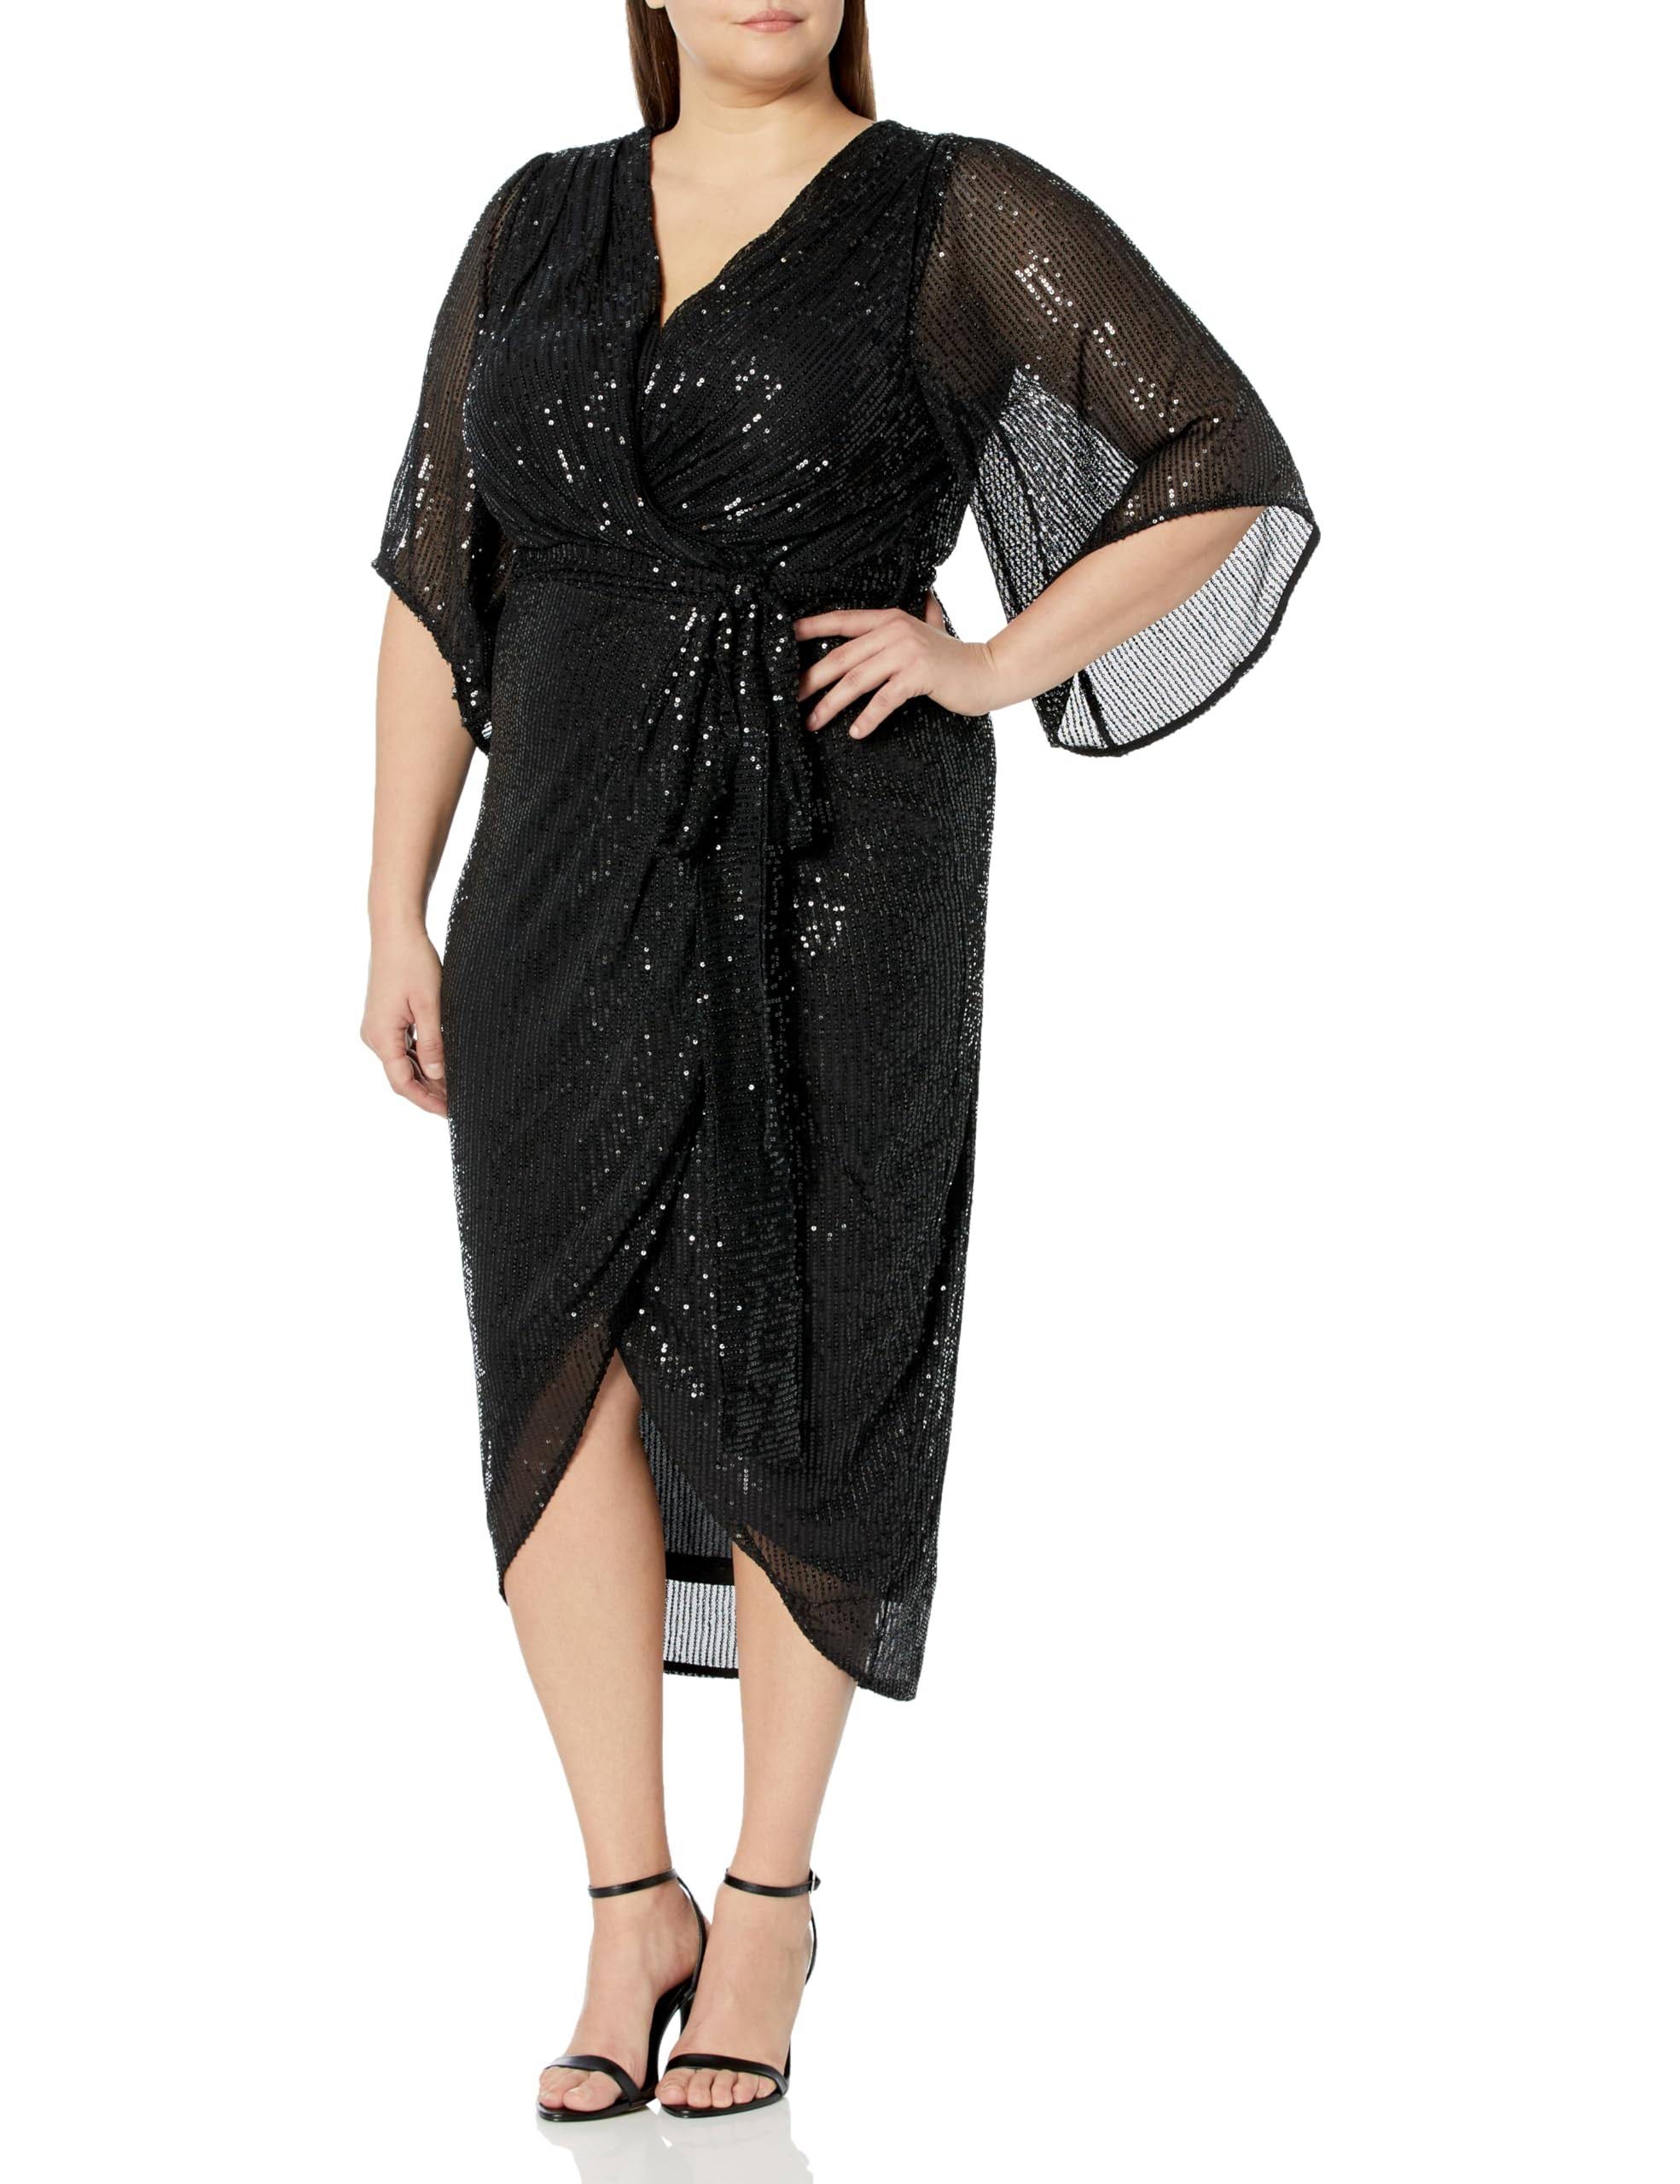 Elegant Plus Size Black Sequin Dress with Lined Midi Hemline | Image